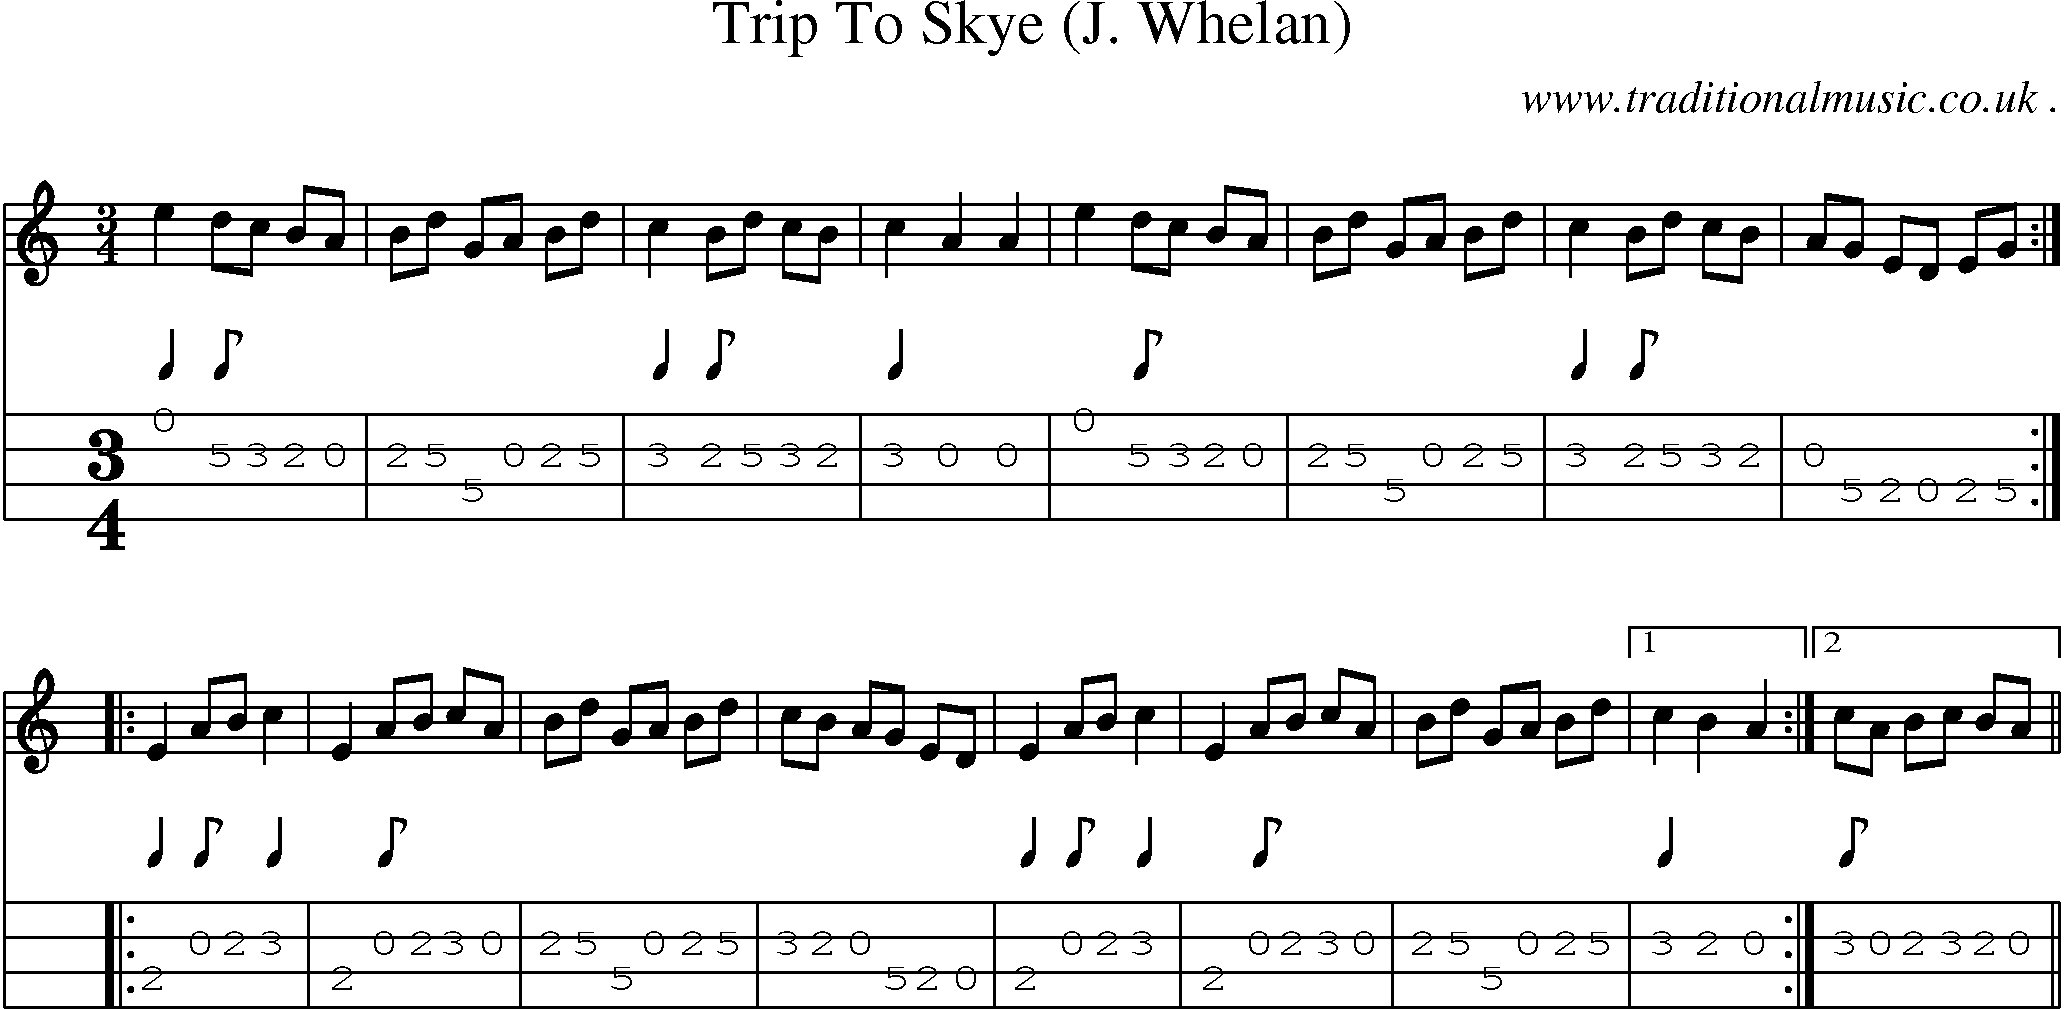 Sheet-Music and Mandolin Tabs for Trip To Skye (j Whelan)